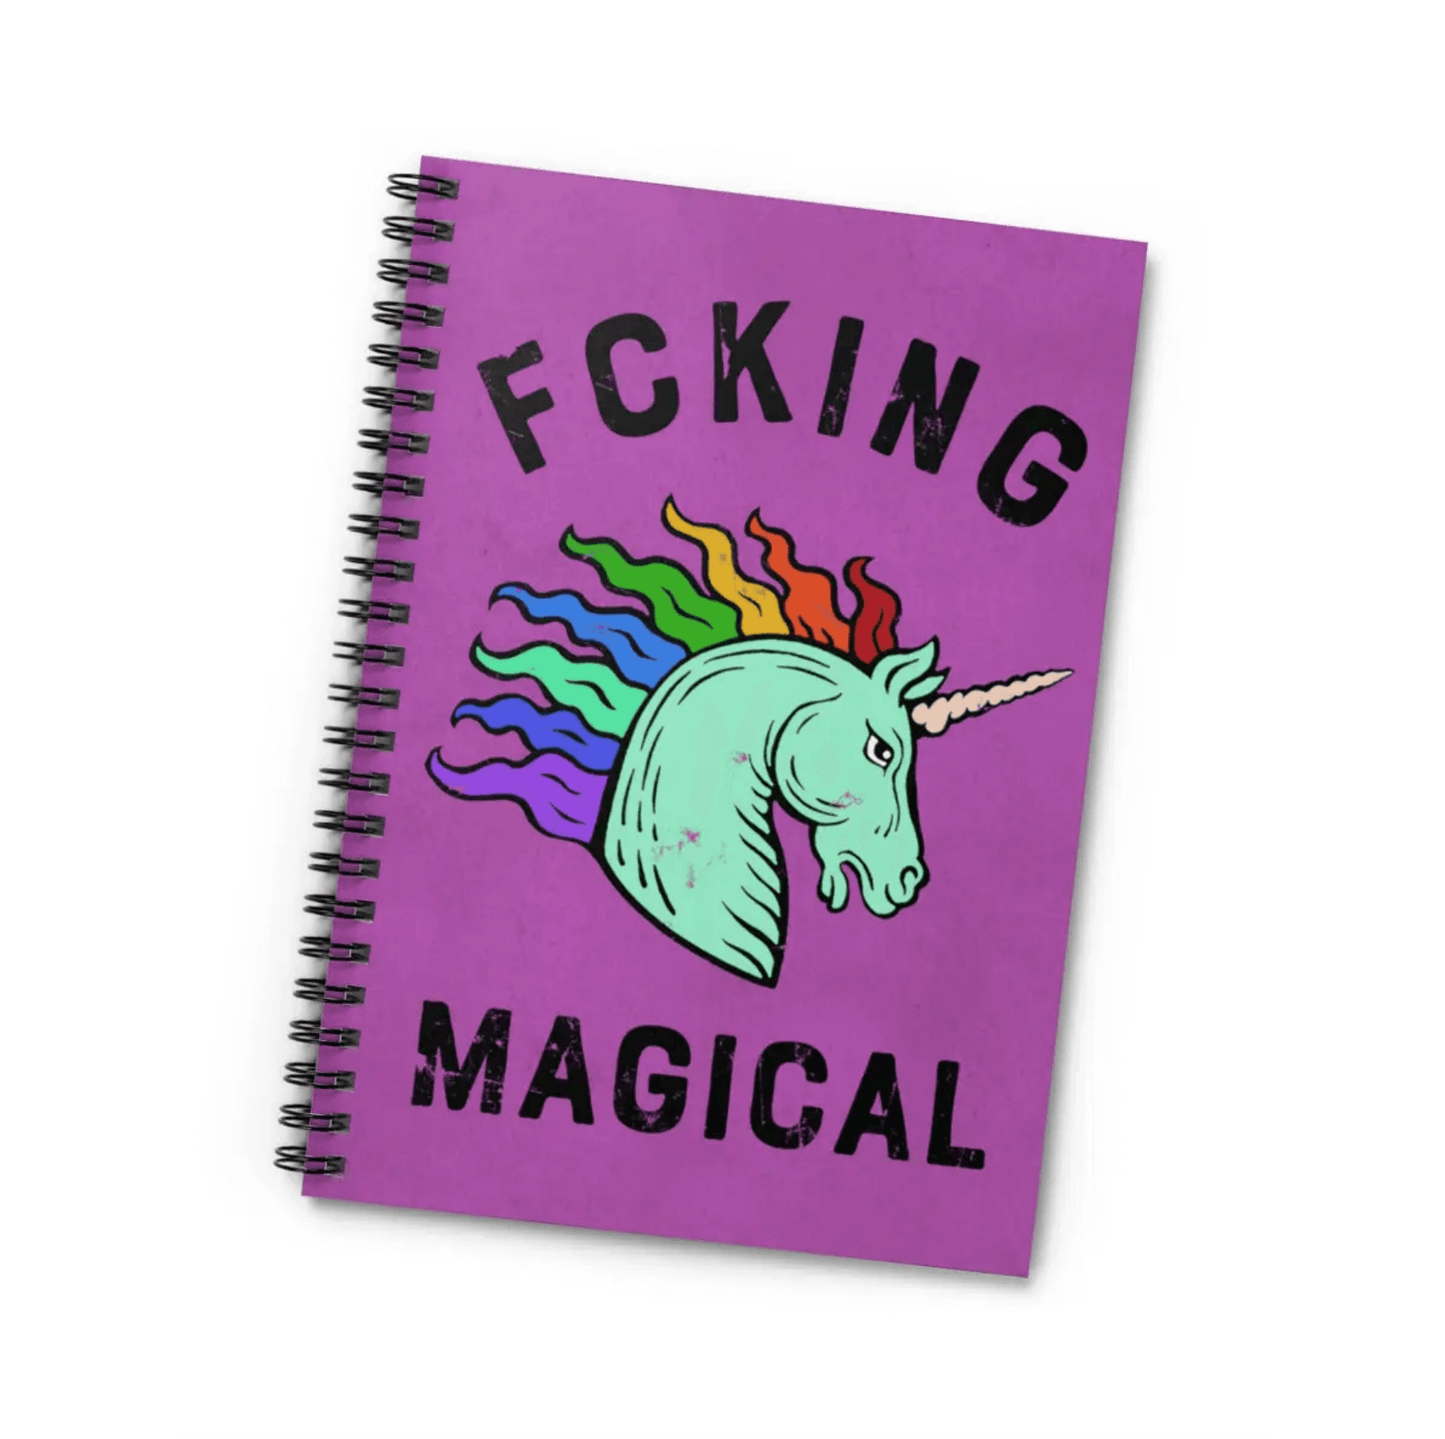 FKING MAGICAL (rainbow unicorn) spiral notebook